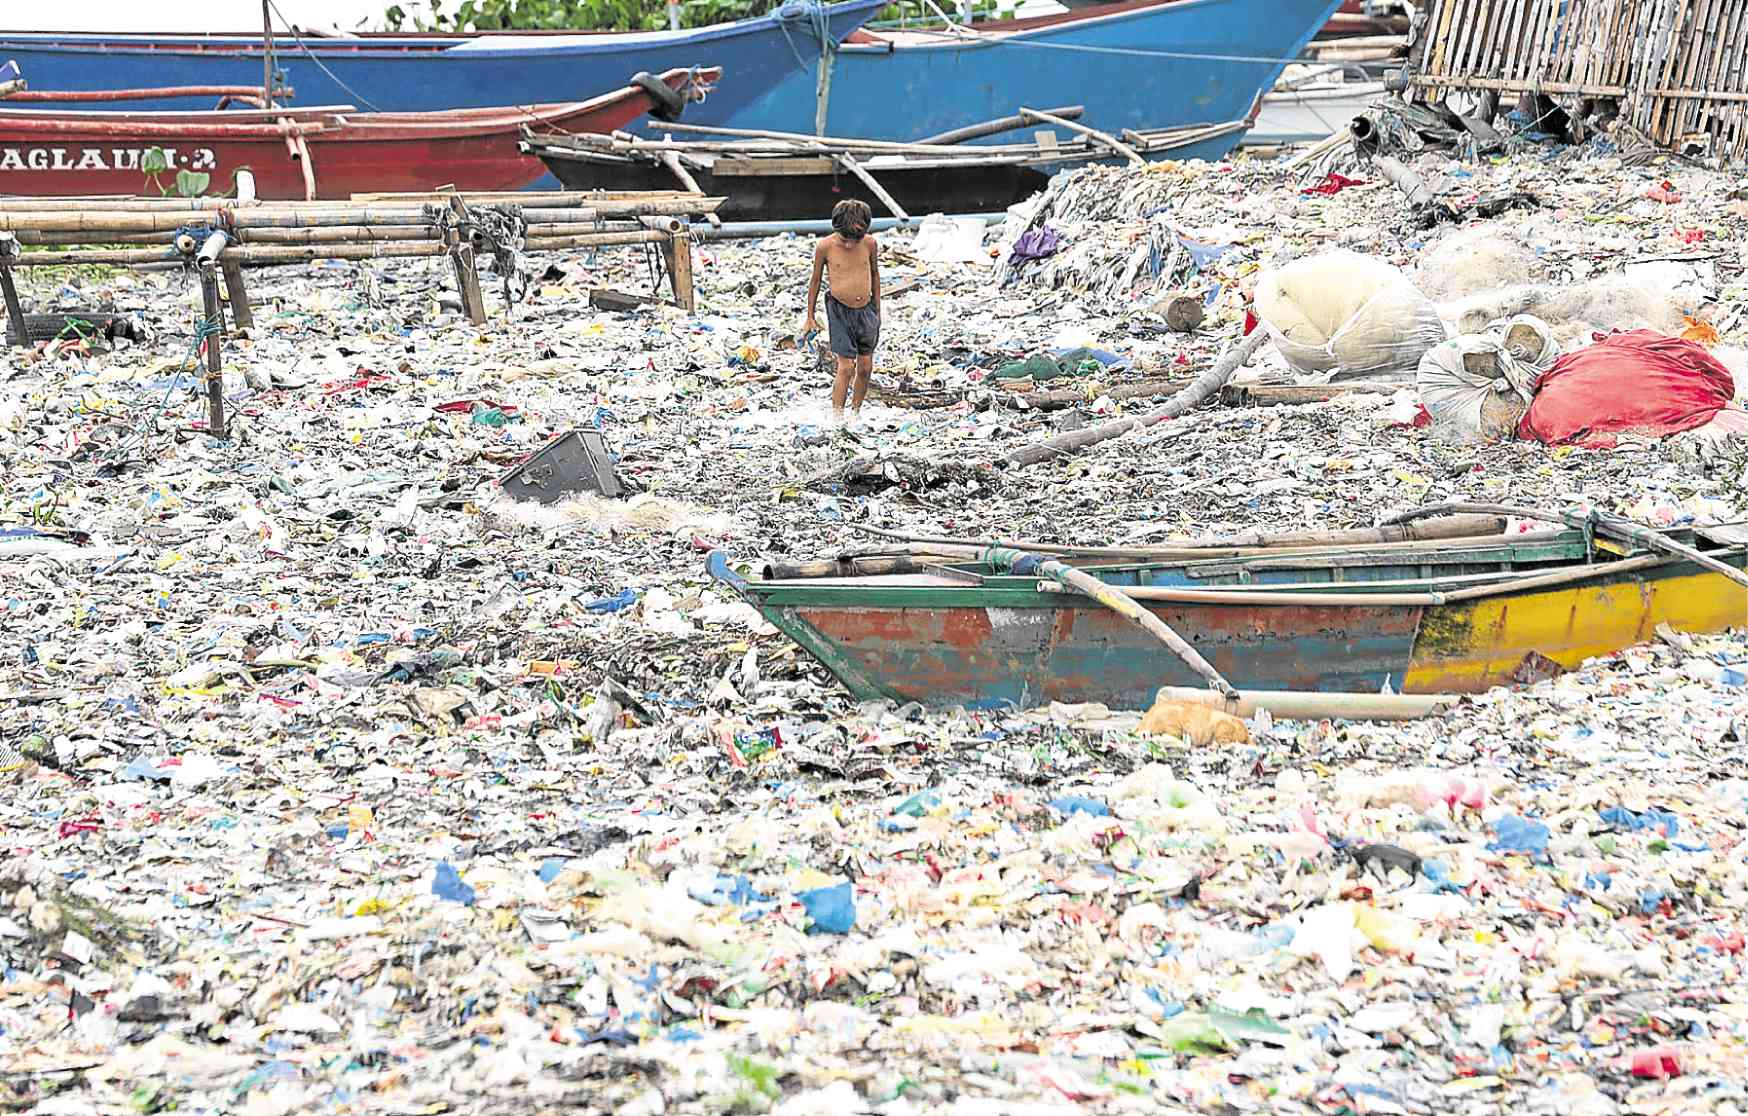 DENR order banning single-use plastics out soon – Cimatu